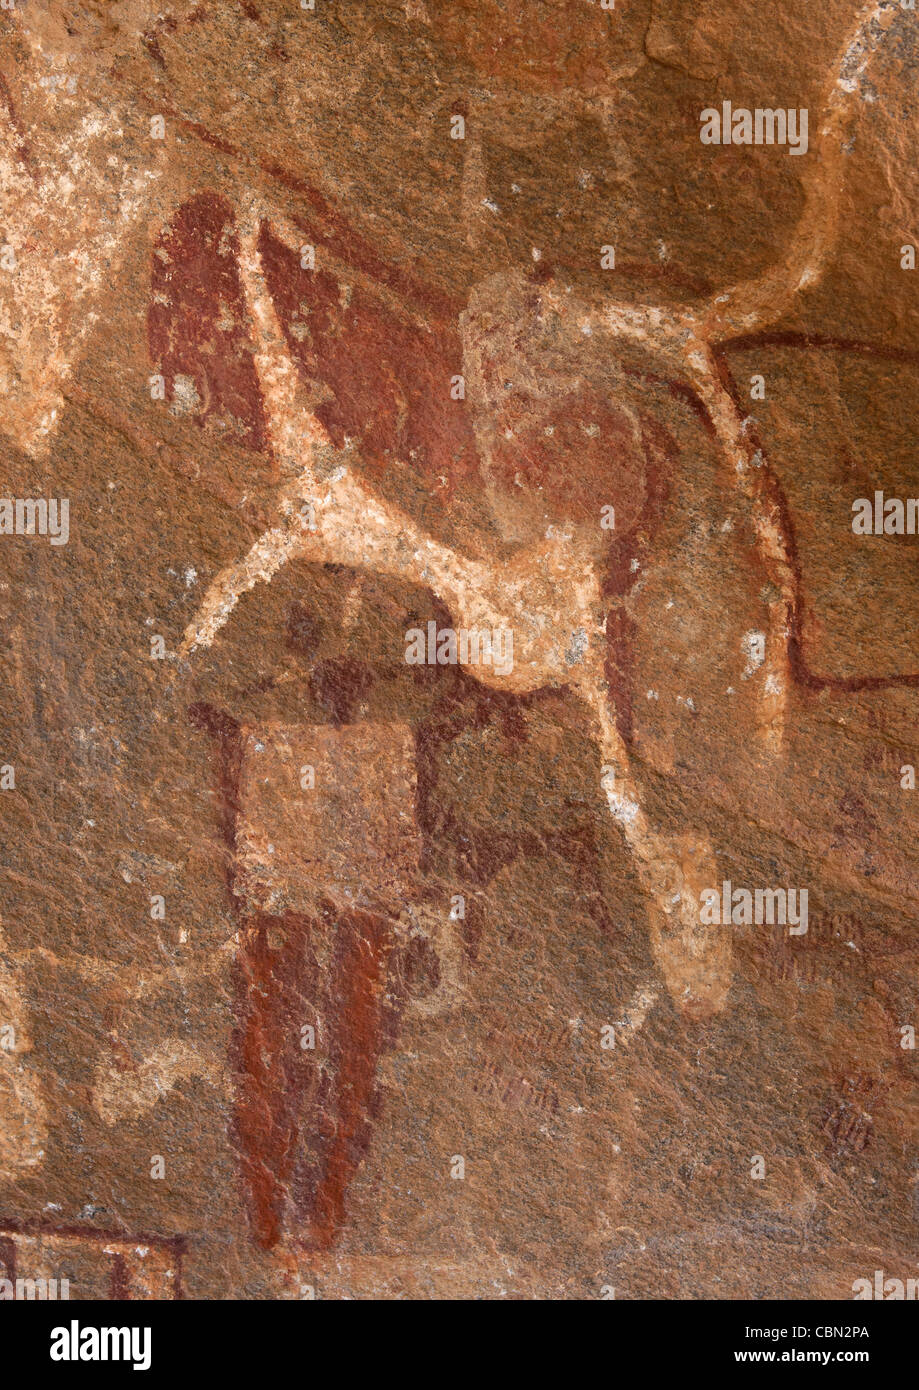 Laas Geel Rock Art Caves, Paintings Depicting Cows And Human Beings Somaliland Stock Photo